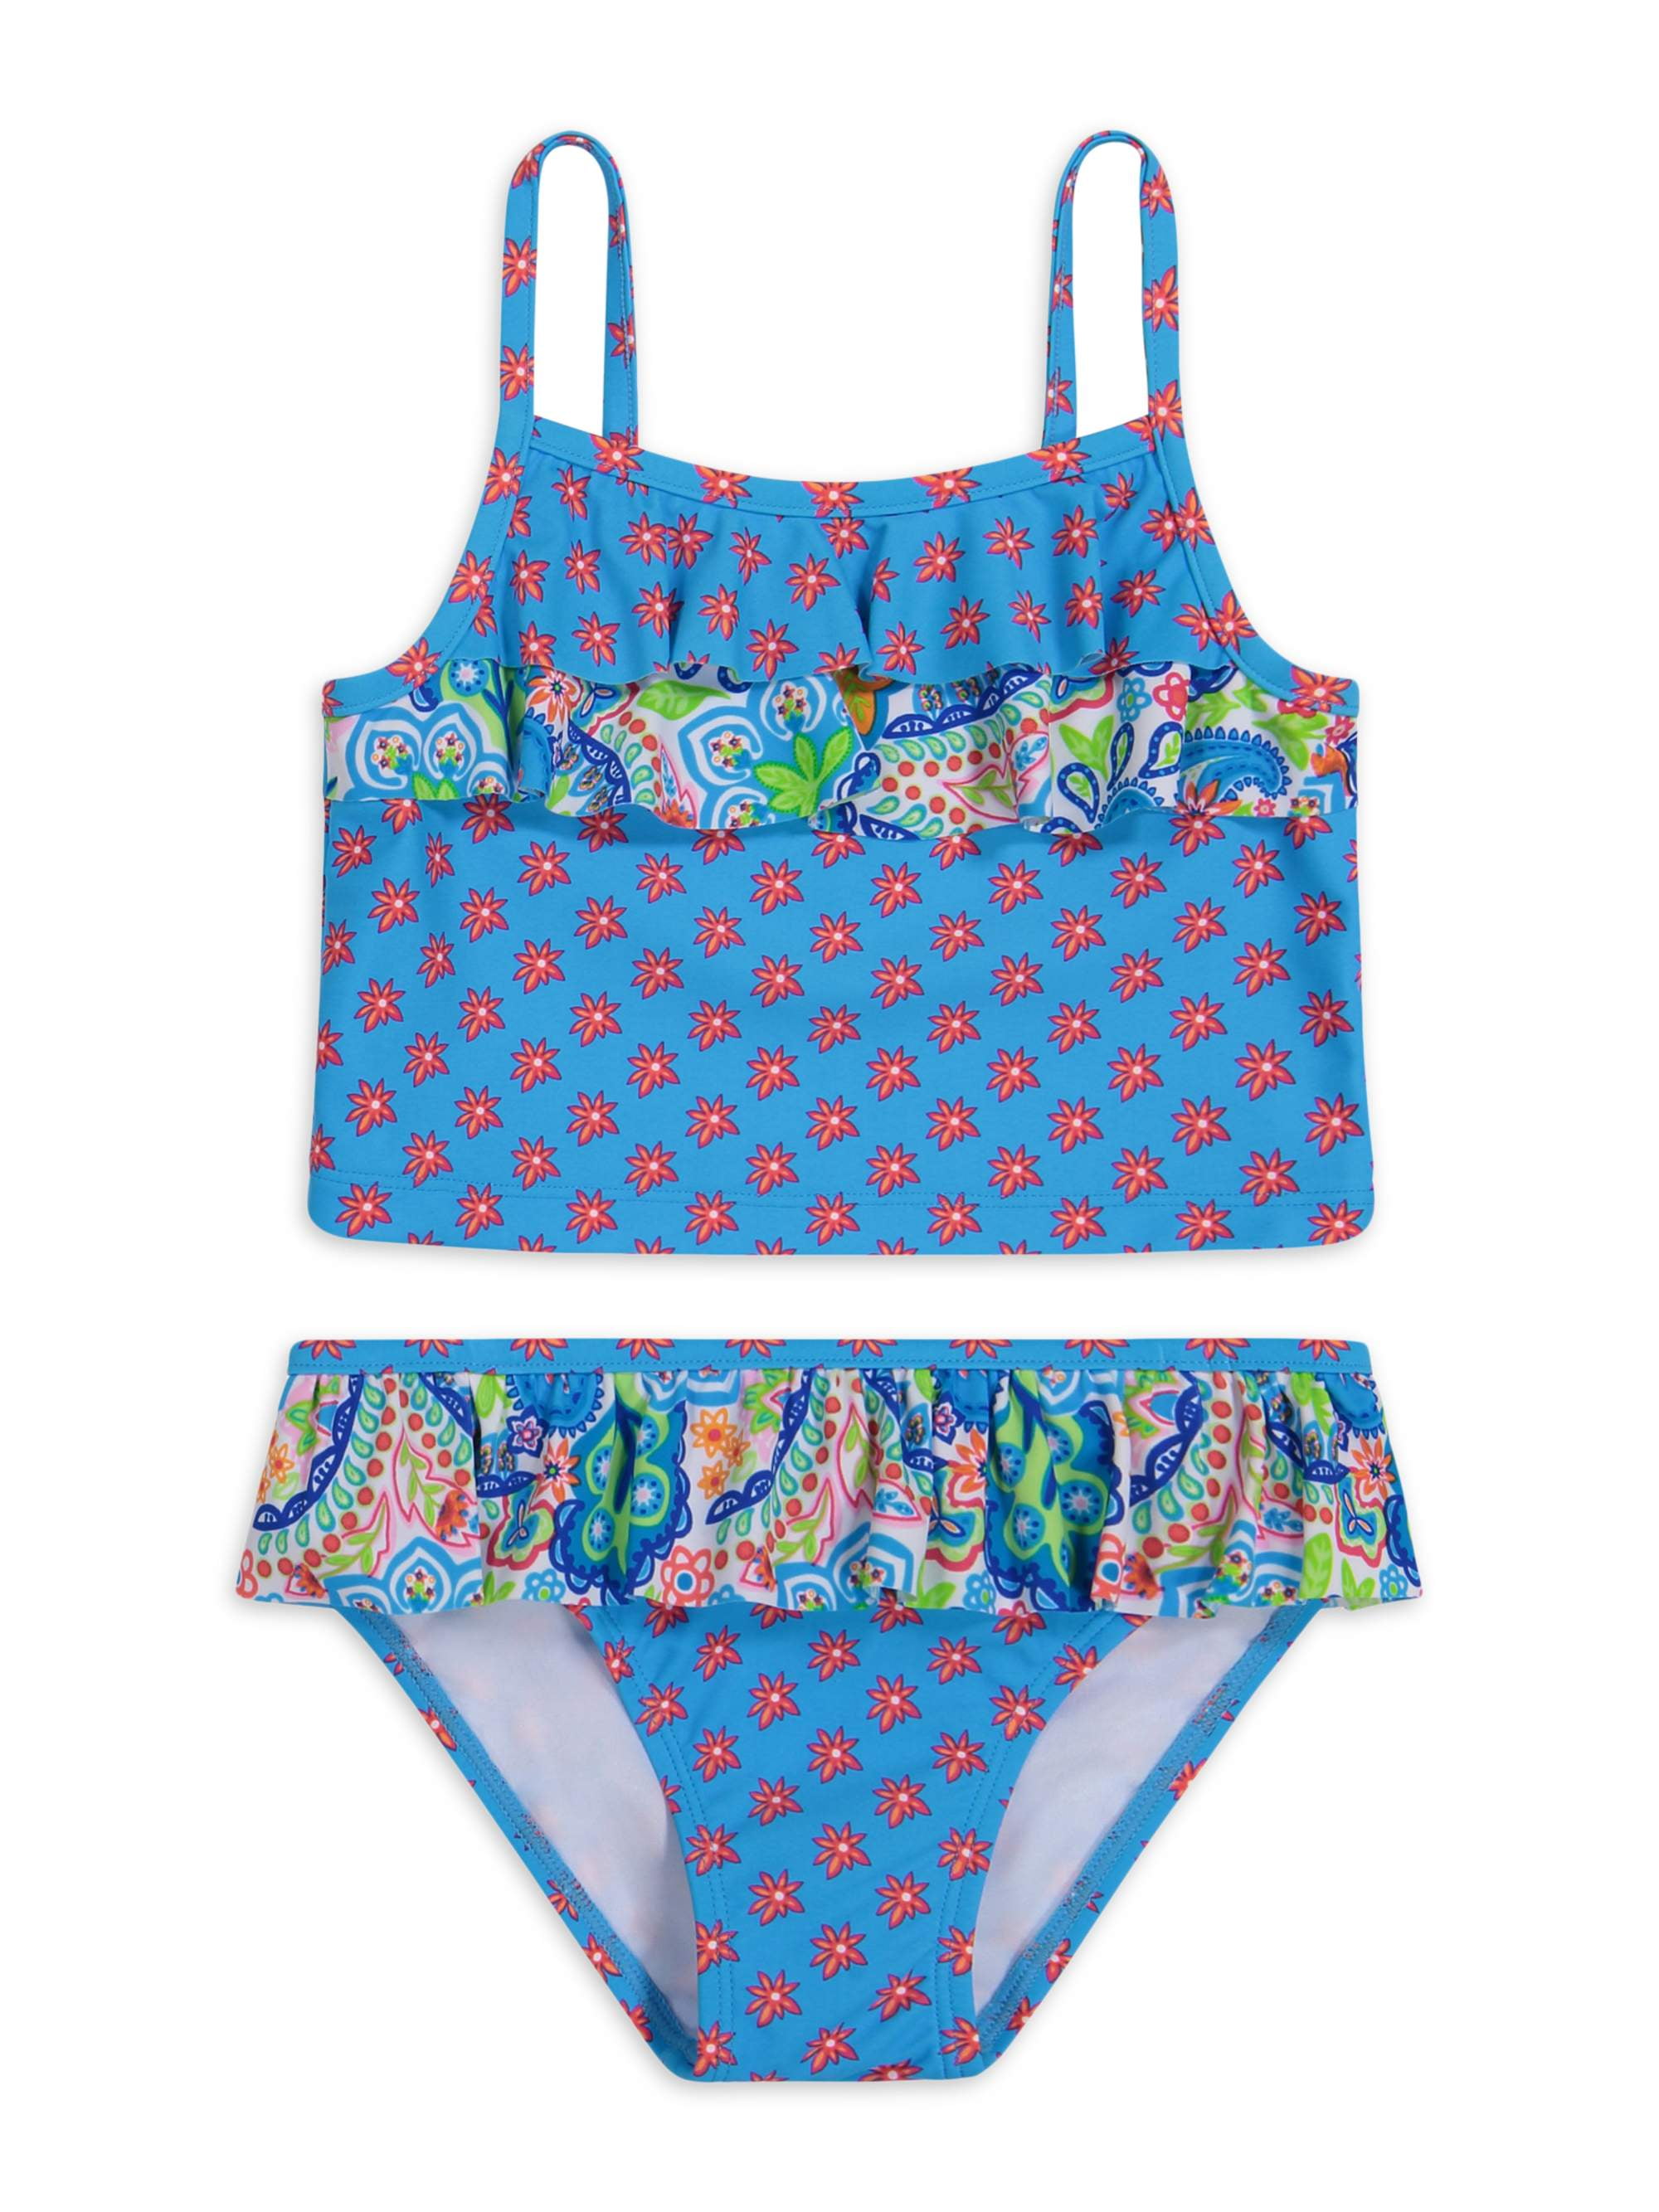 Tommy Bahama Girls Toddler Two-Piece Bikini Swimsuit Bathing Suit 